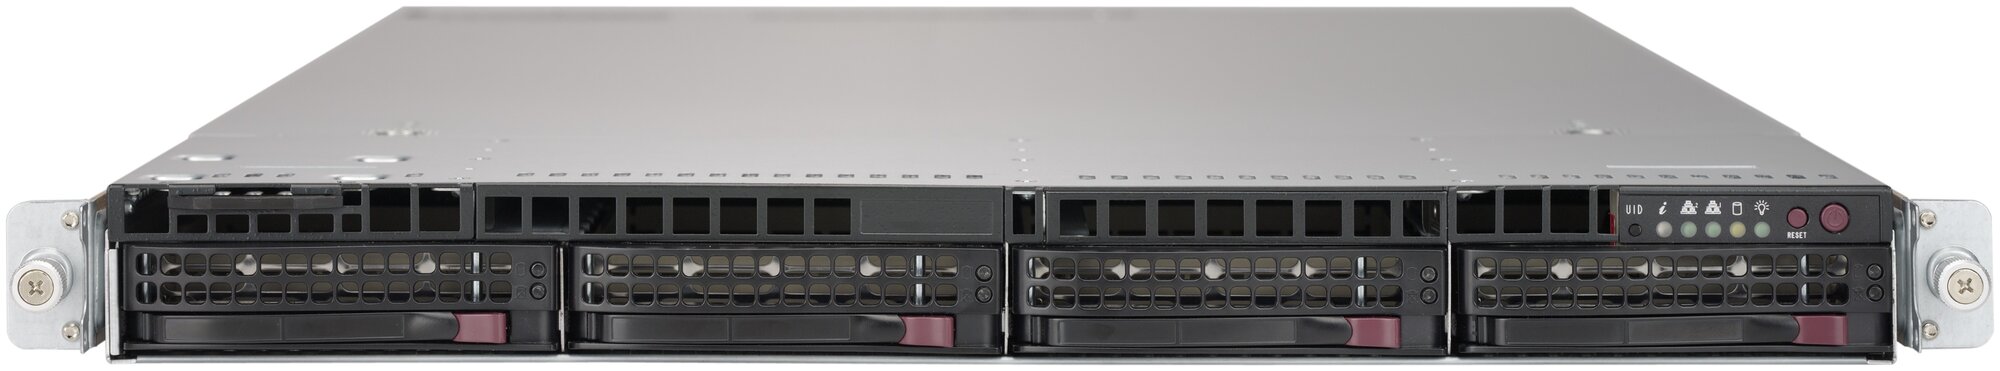 Серверная платформа Supermicro Ultra С621 1G 4P 2x750W